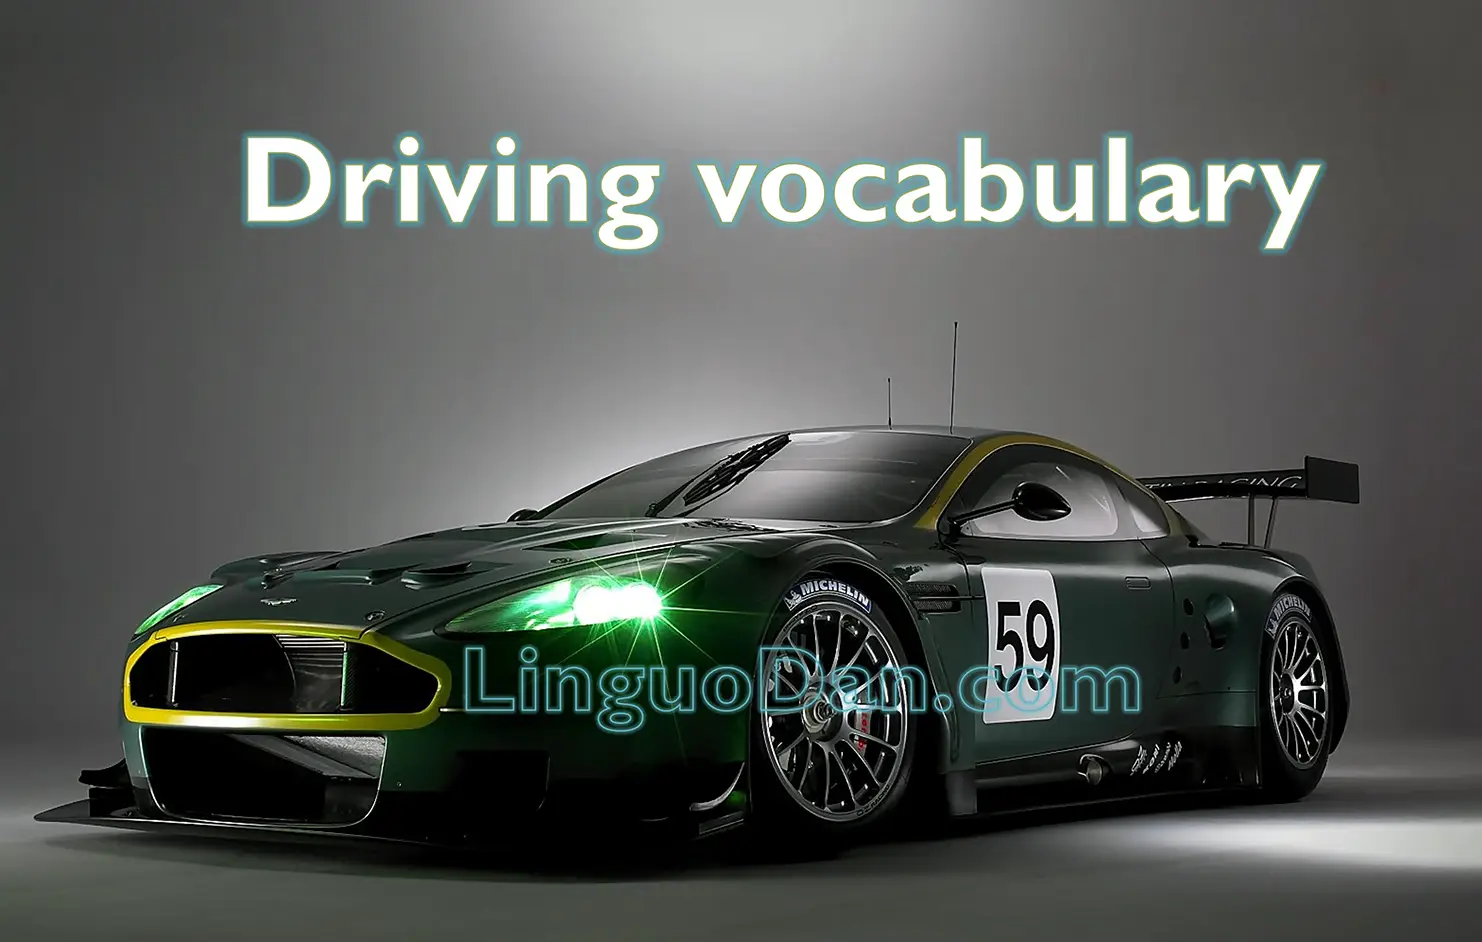 Driving vocabulary: Expanding the boundaries of communication - LinguoDan